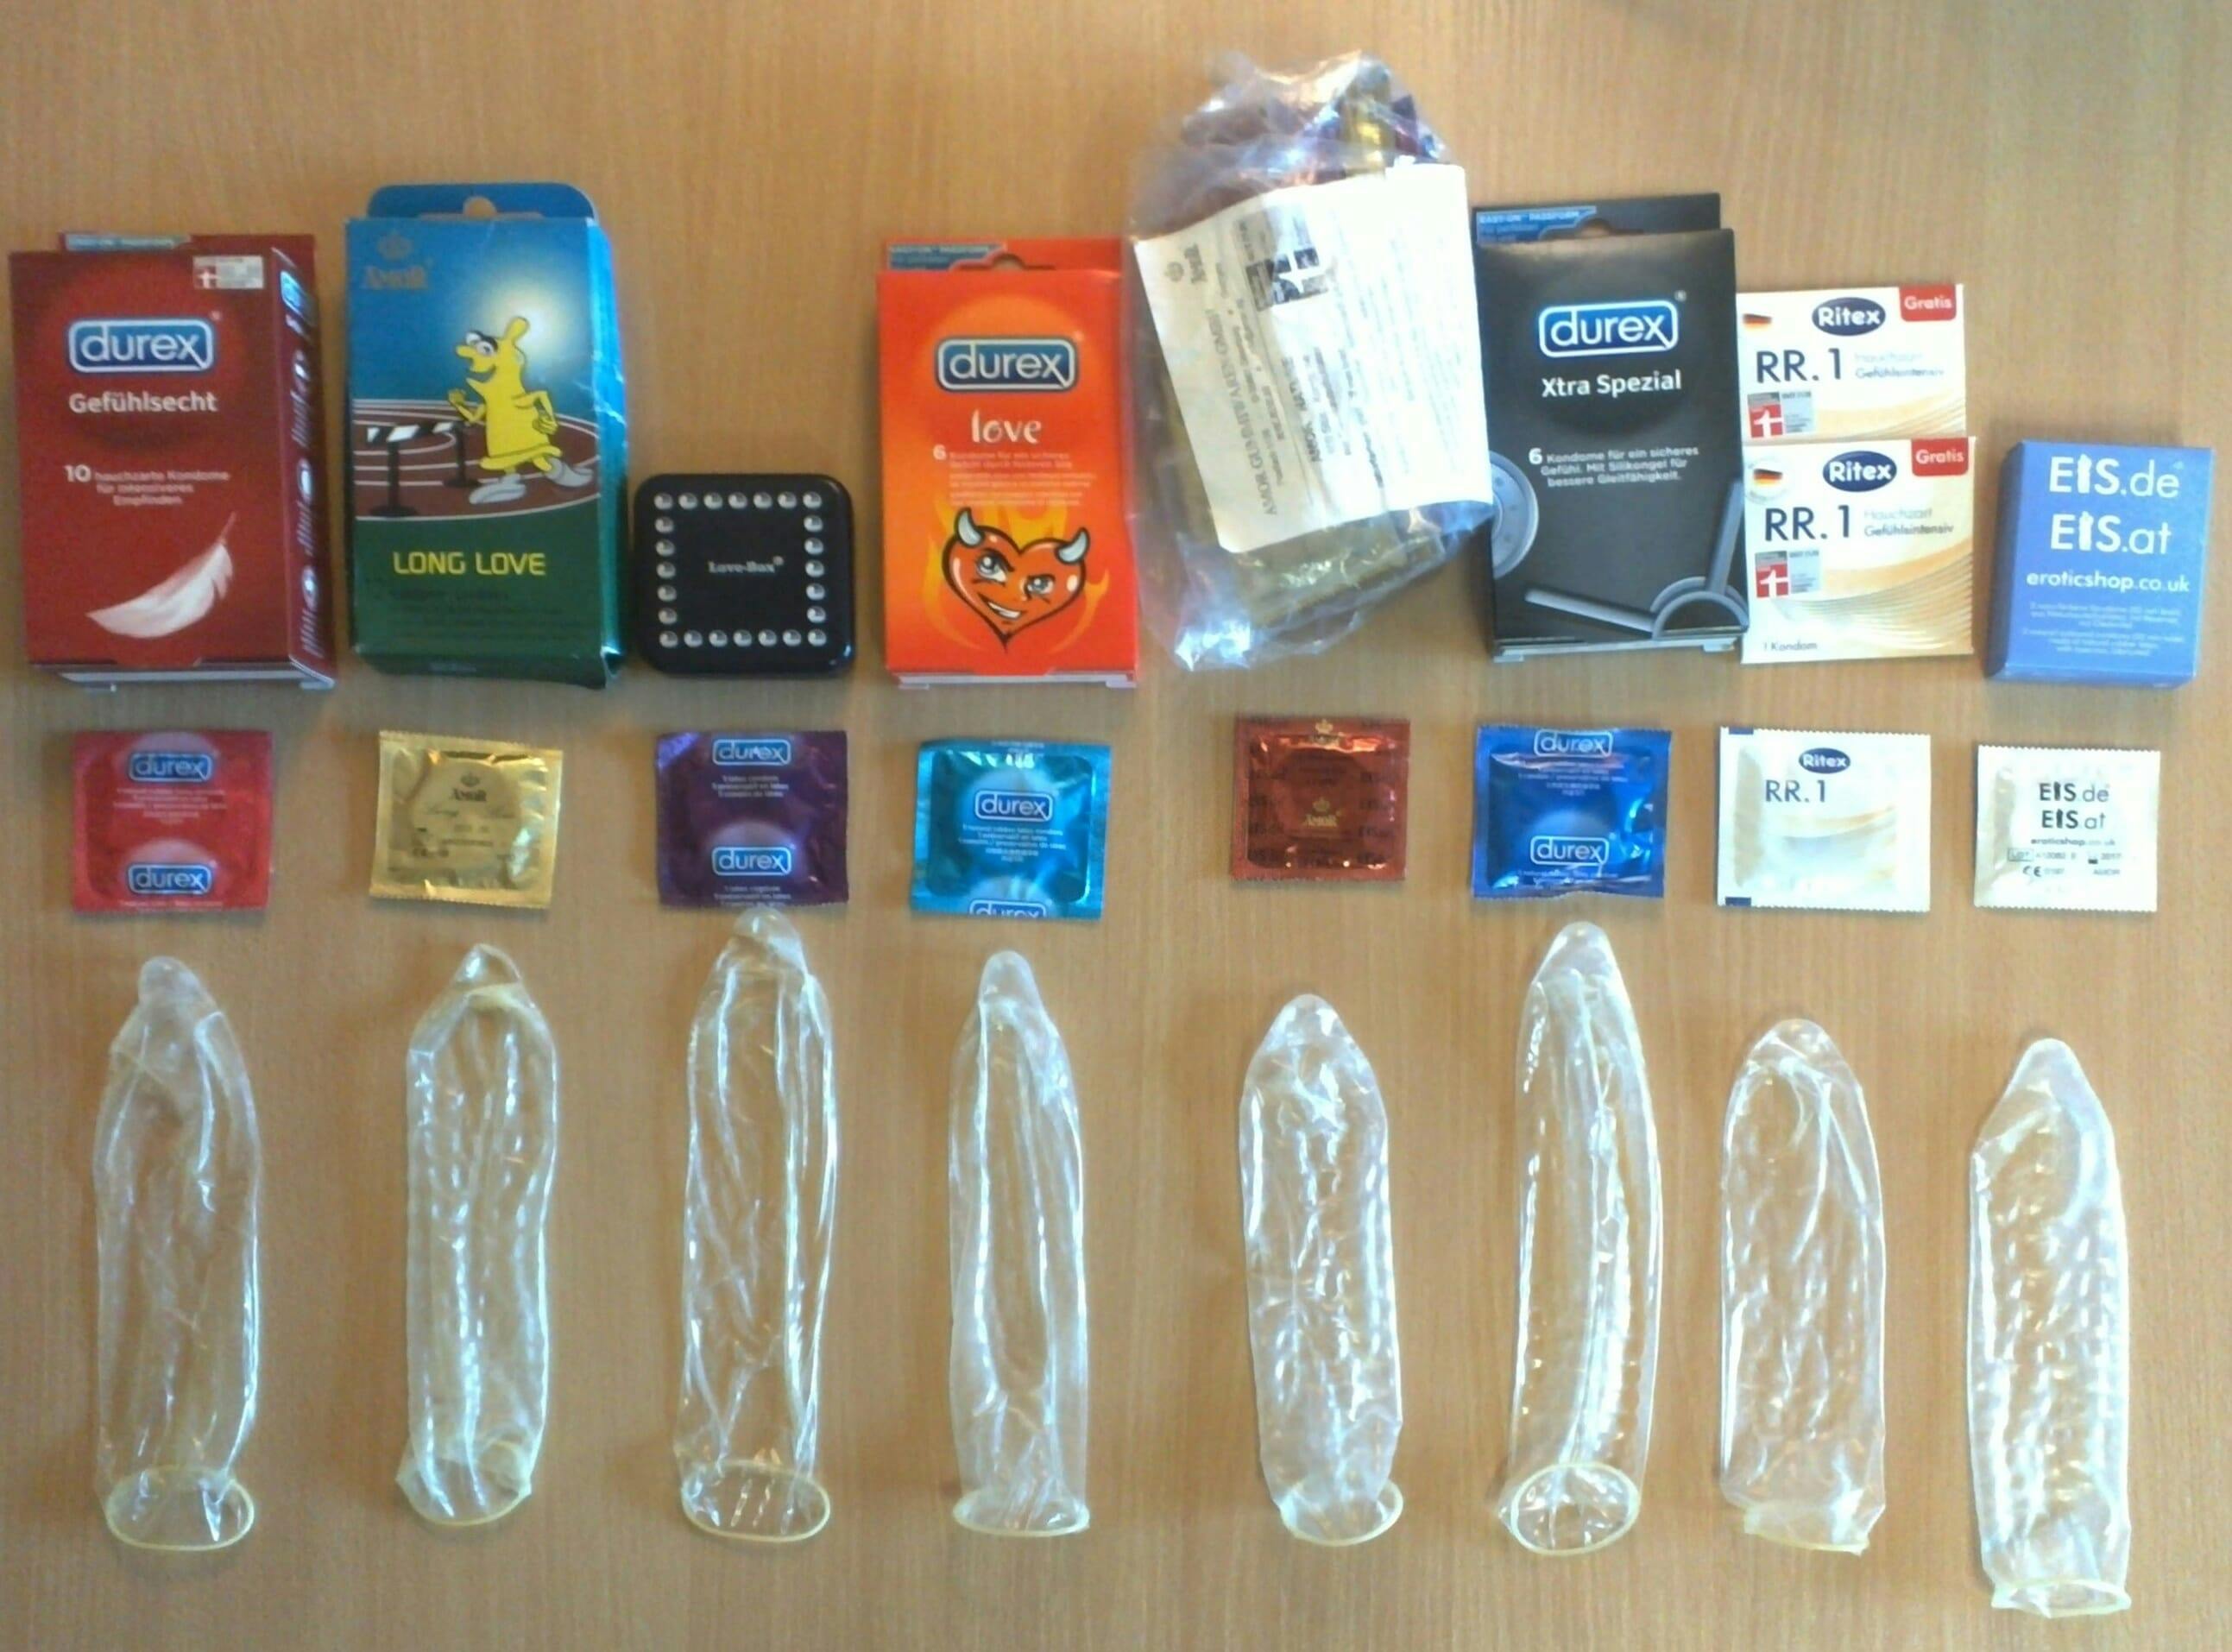 history of condoms